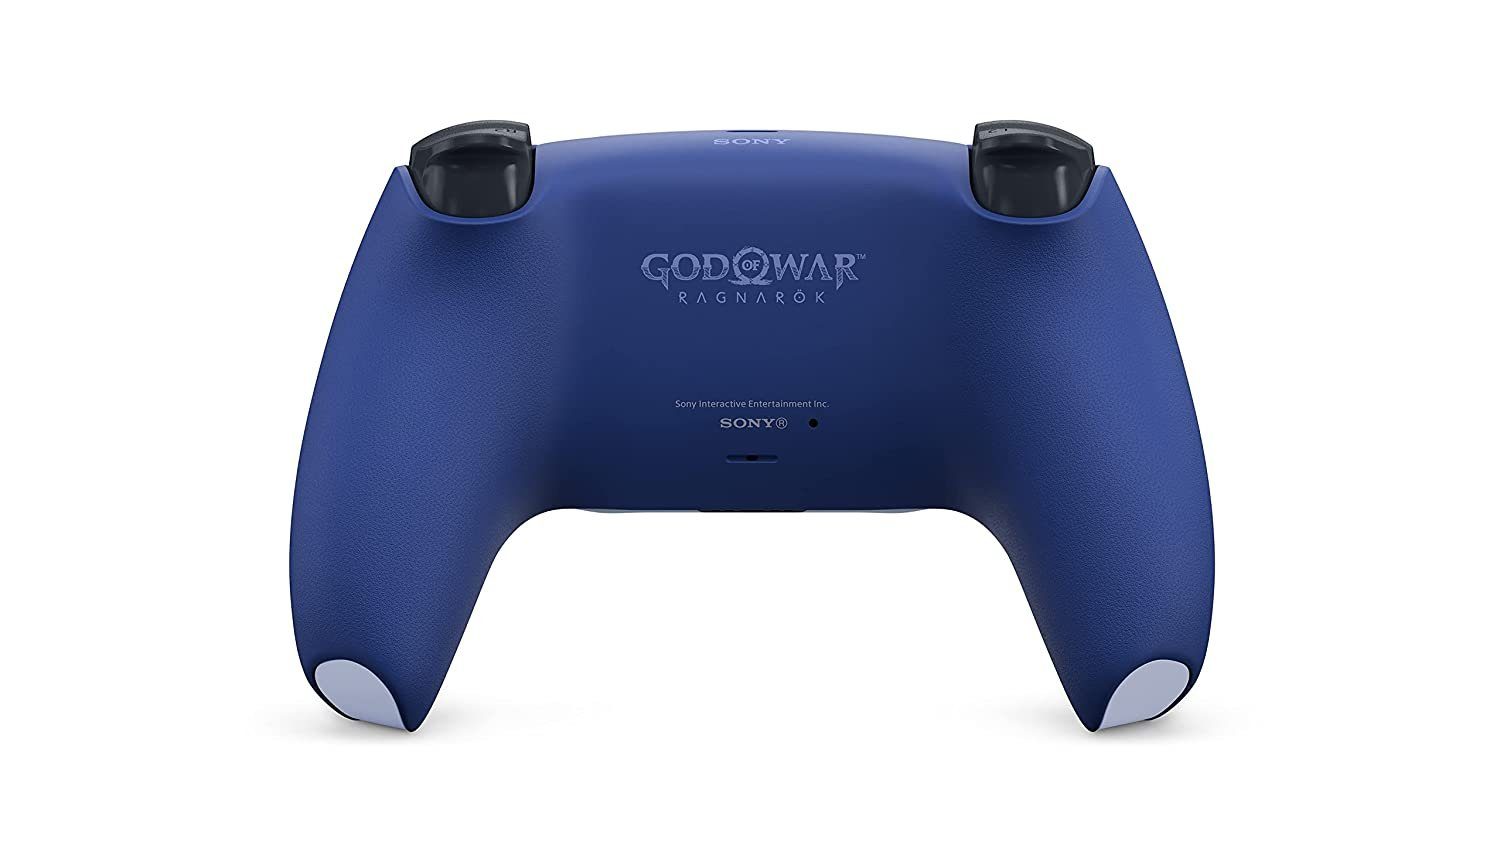 Limited 5-Controller War: Original Sony DualSense Wireless 5 Playstation of God Edition Controller PlayStation Ragnarök